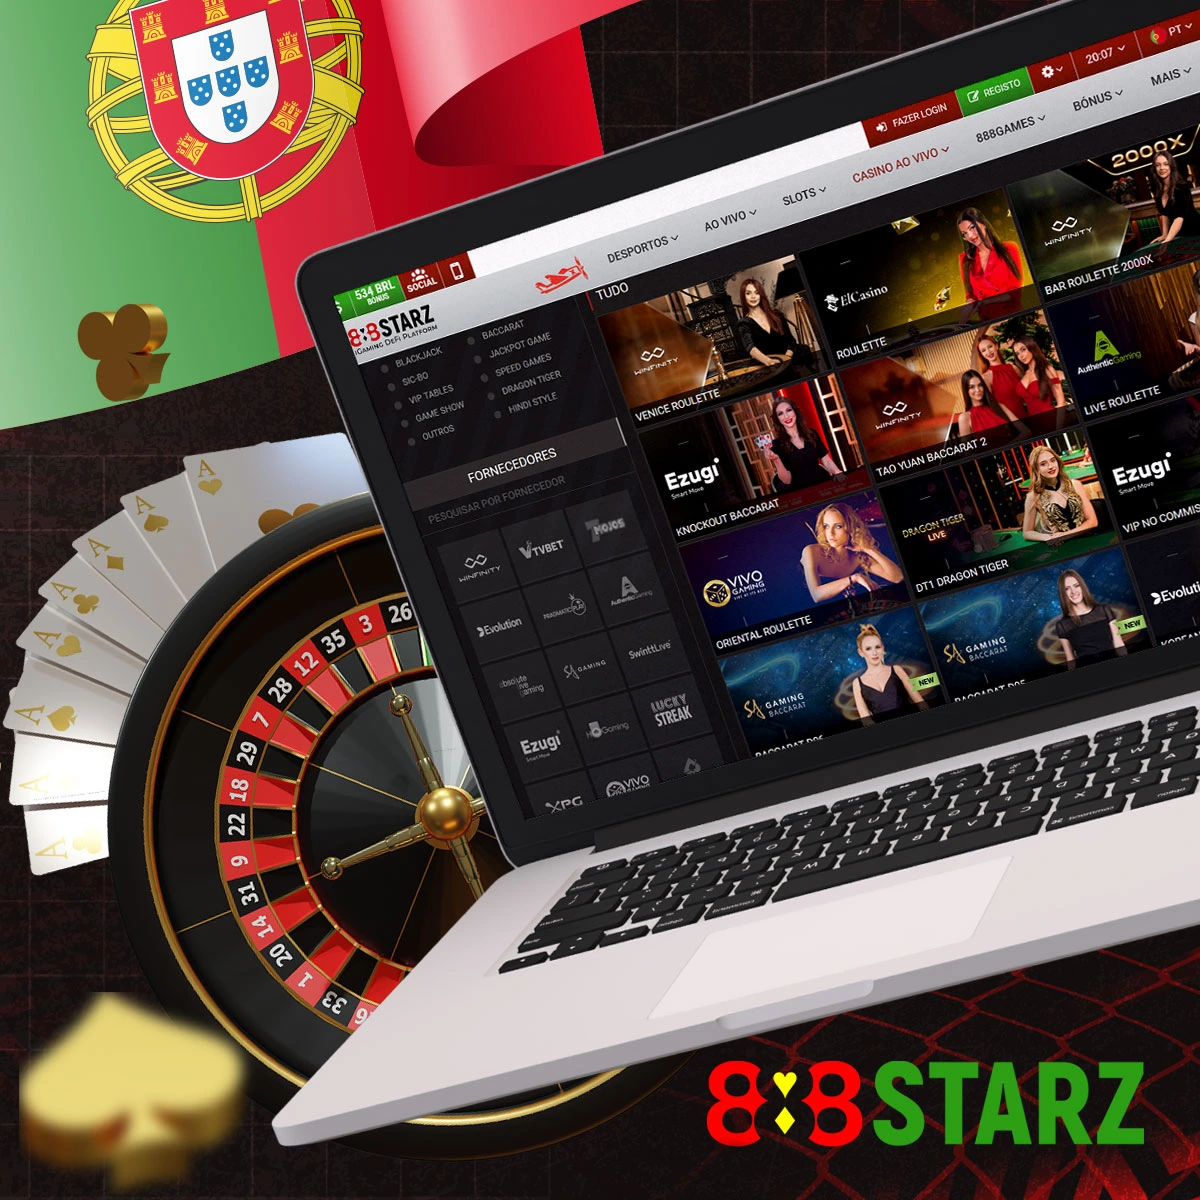 Como funciona o casino ao vivo na plataforma 888Starz?